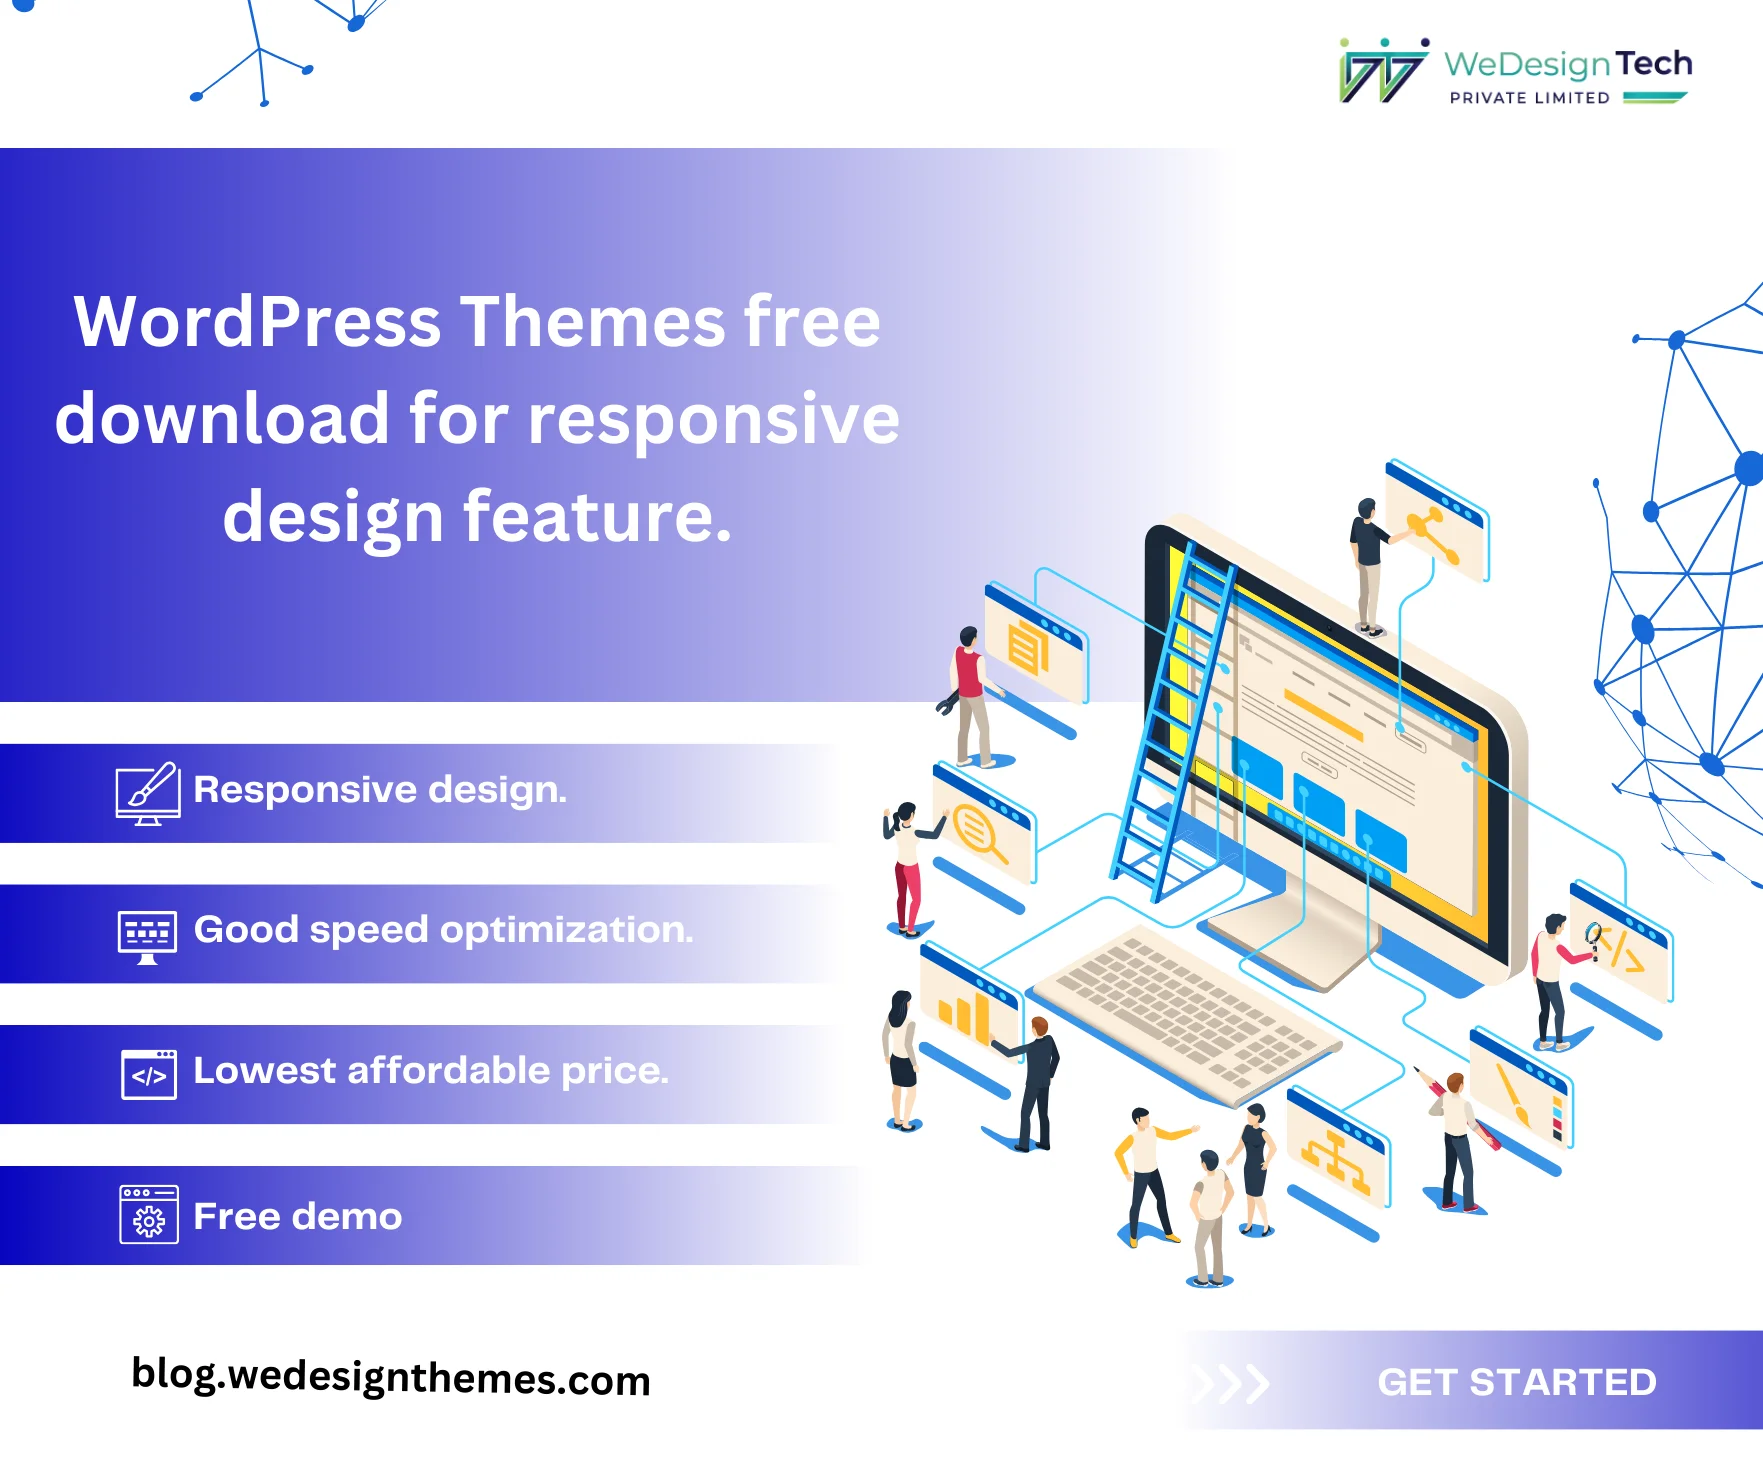 WordPress Themes free download